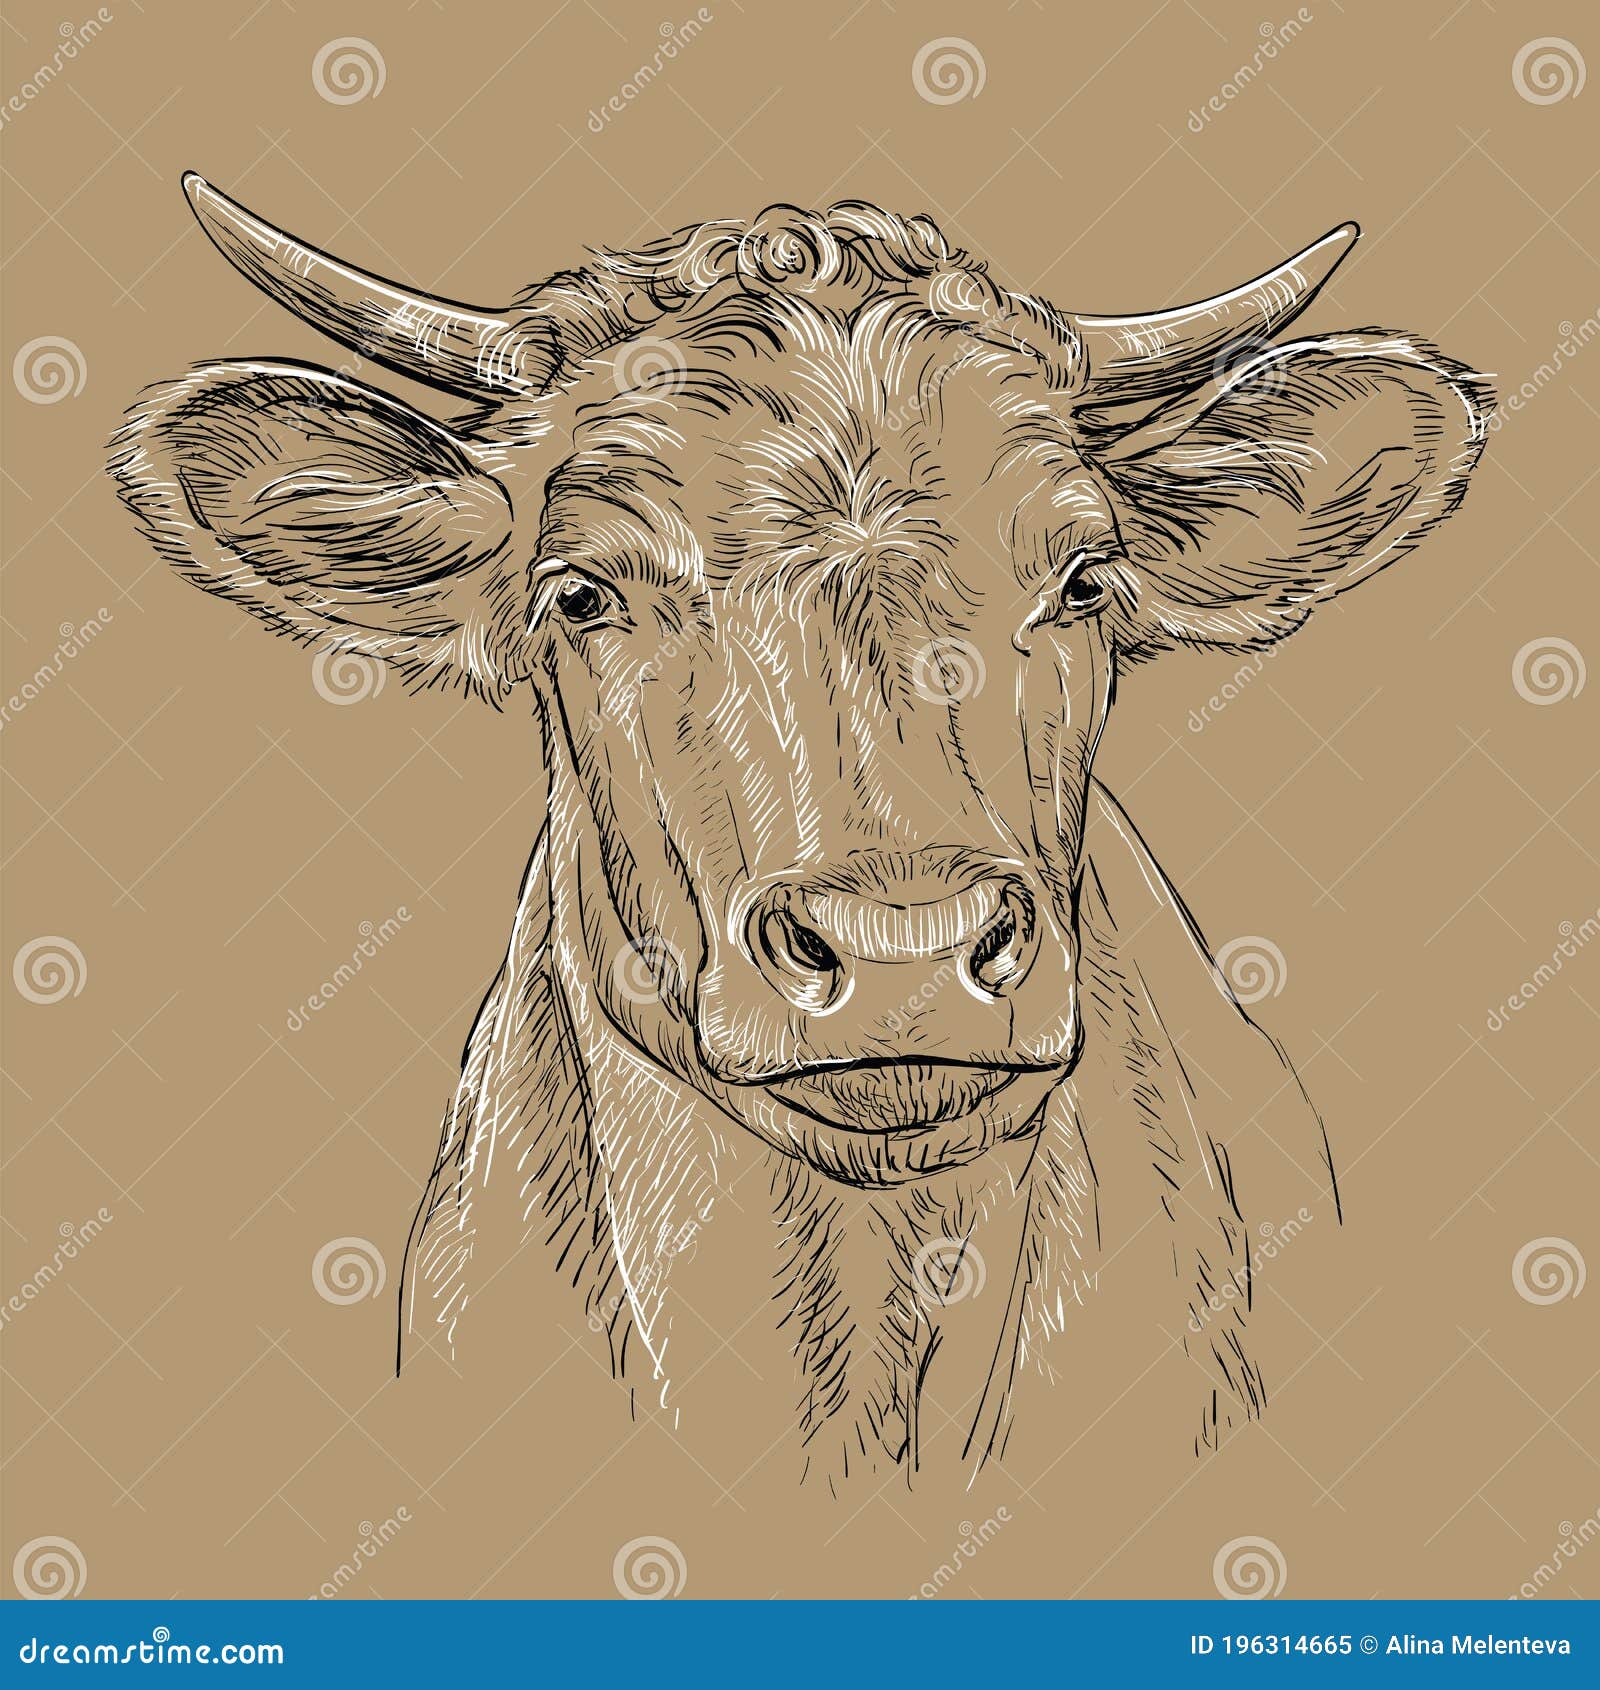 Bull Mascot Head Illustration - A cartoon illustration of a Bull Mascot. -  Stock Image - Everypixel